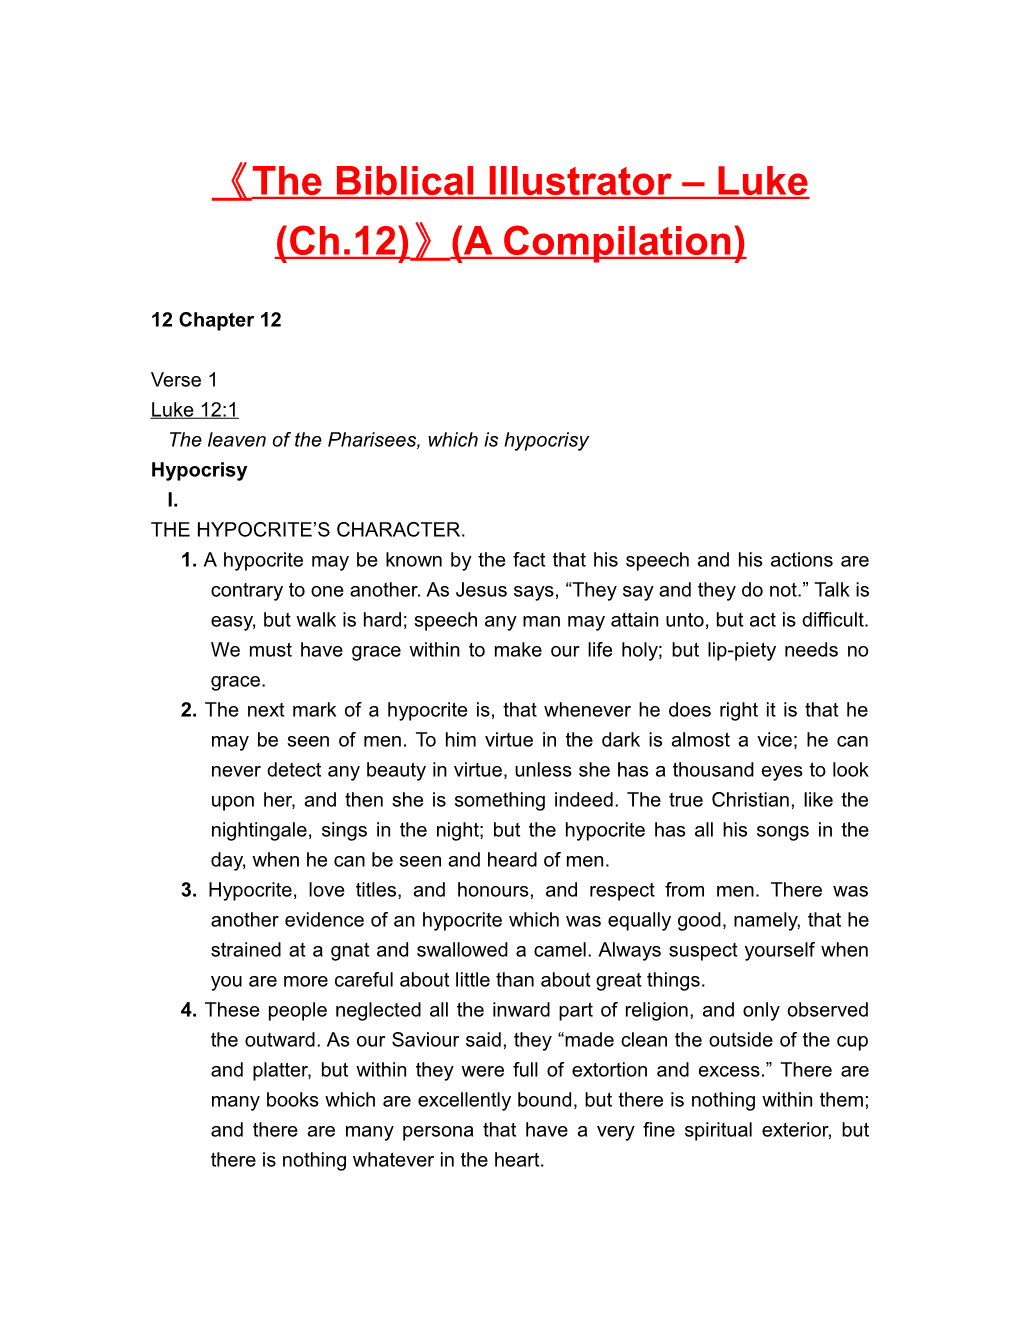 The Biblical Illustrator Luke (Ch.12) (A Compilation)